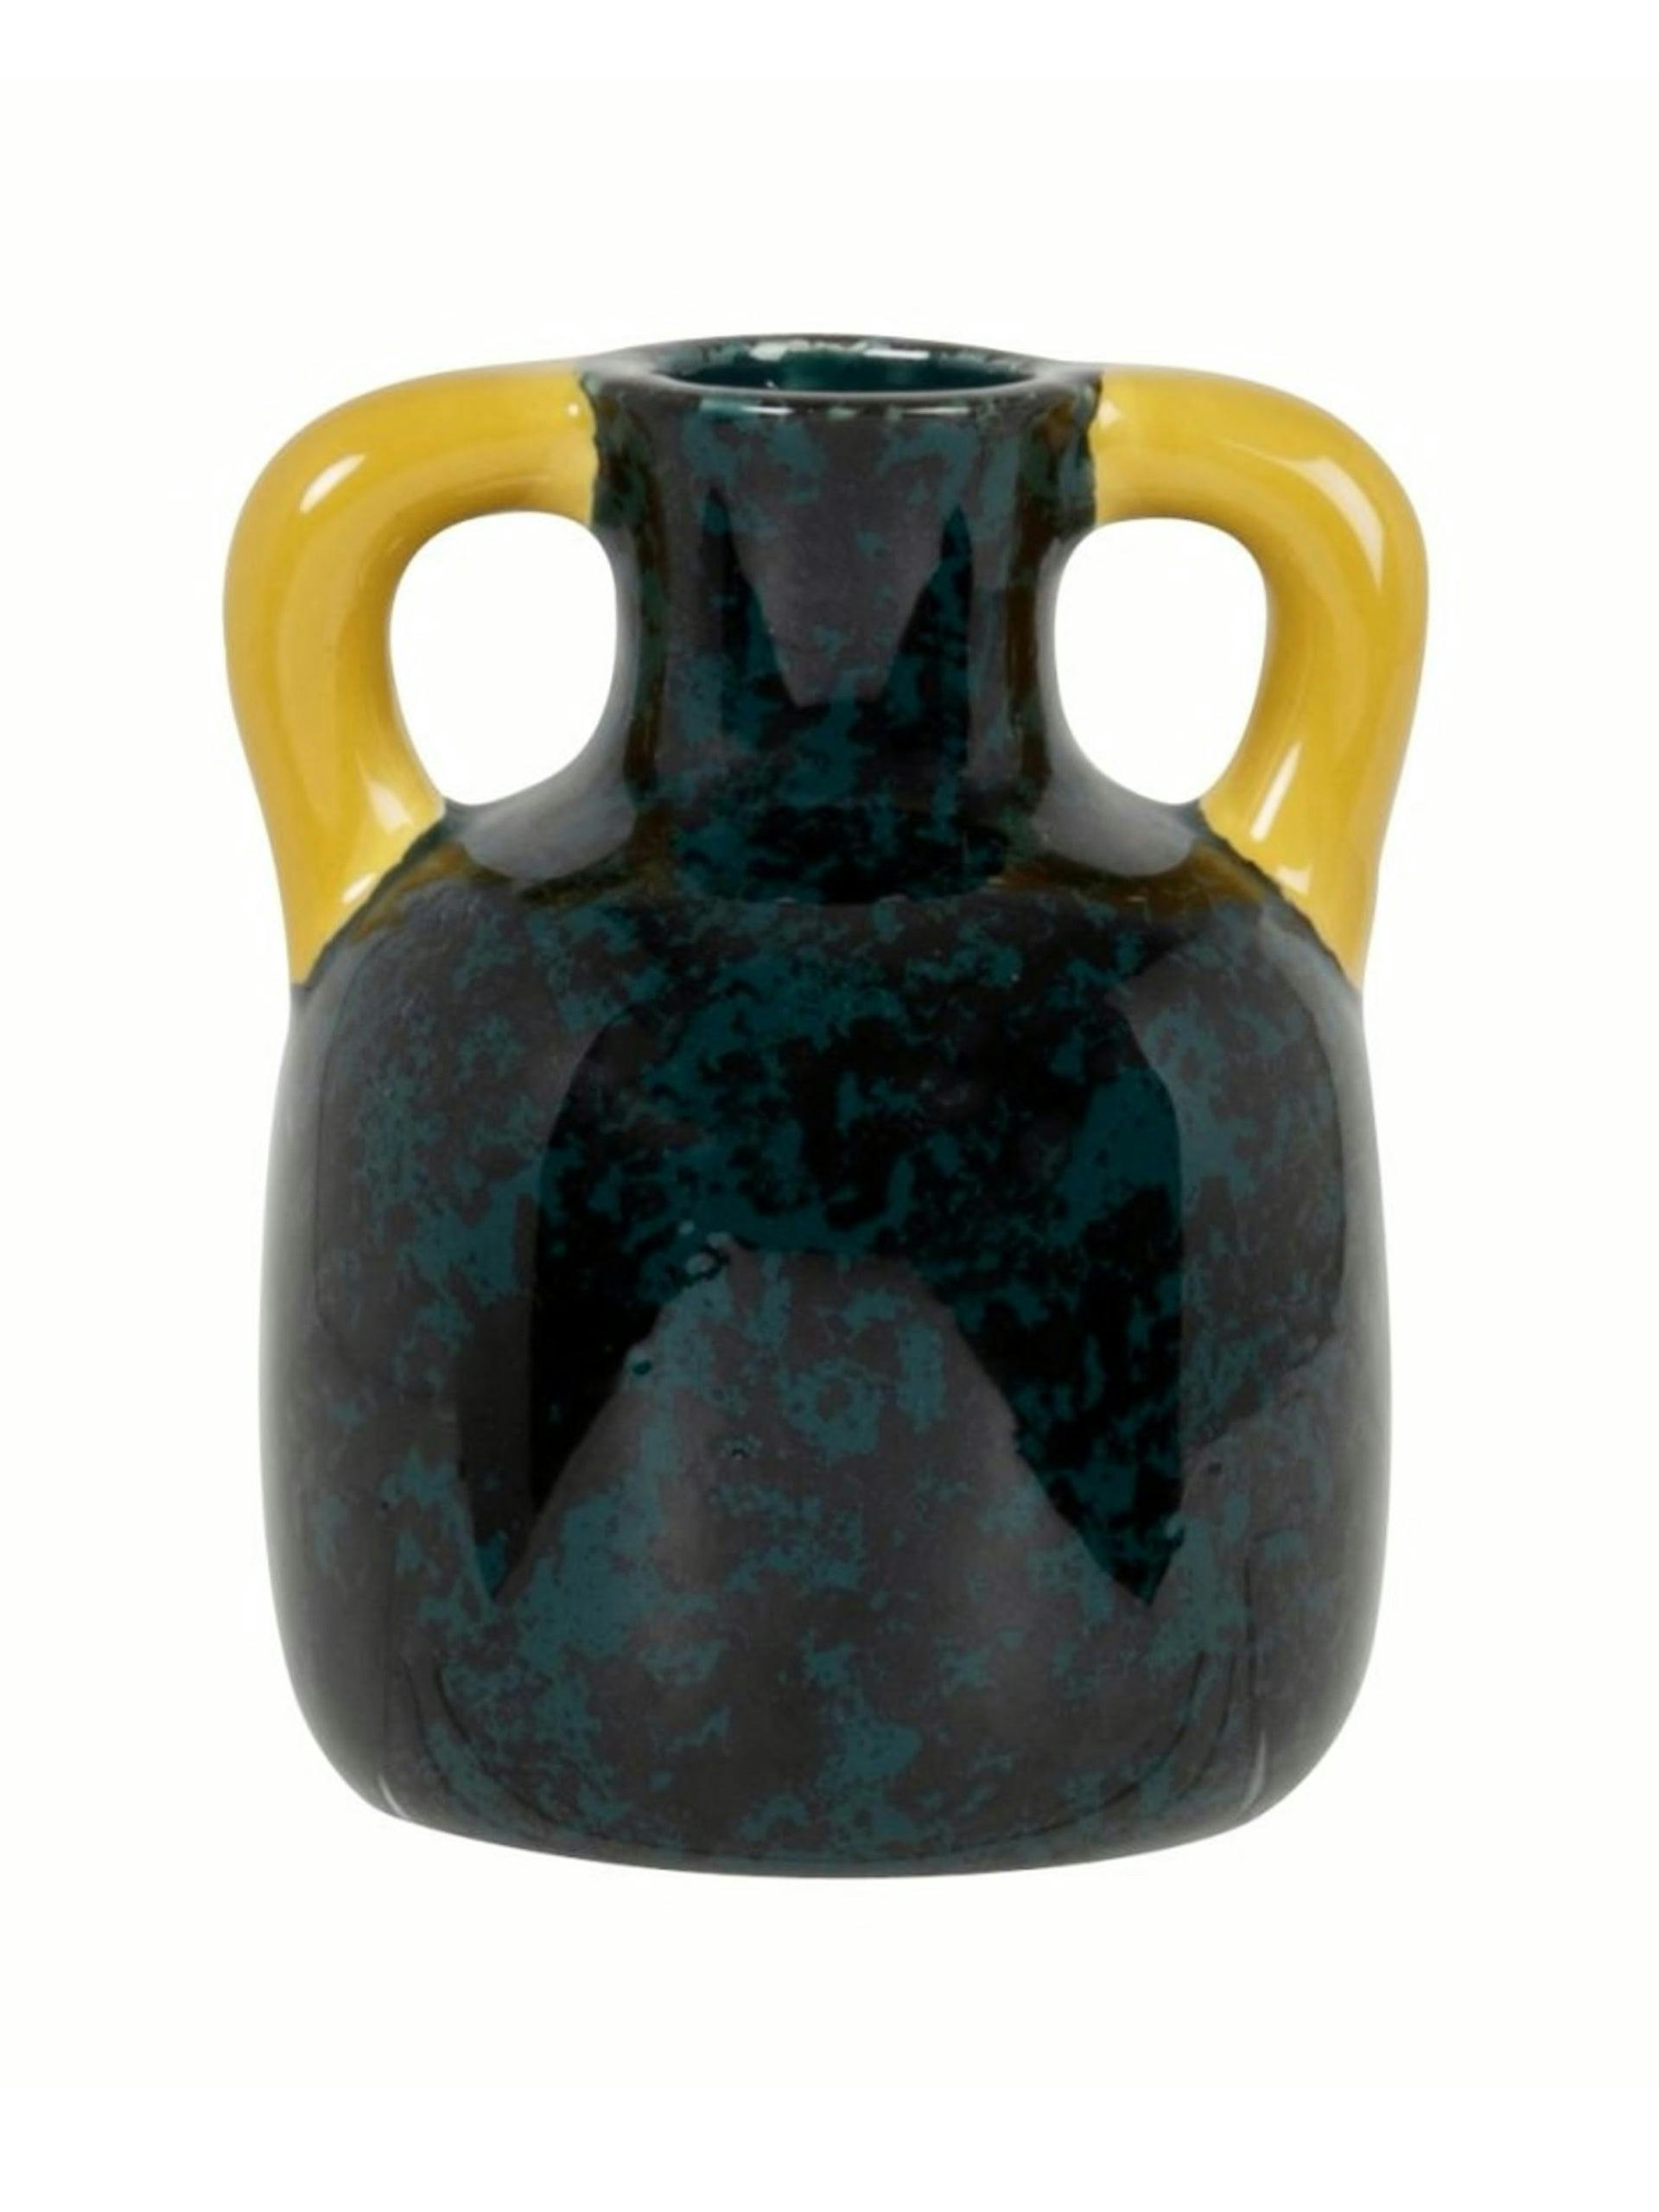 Black Dolomite jug with yellow handles